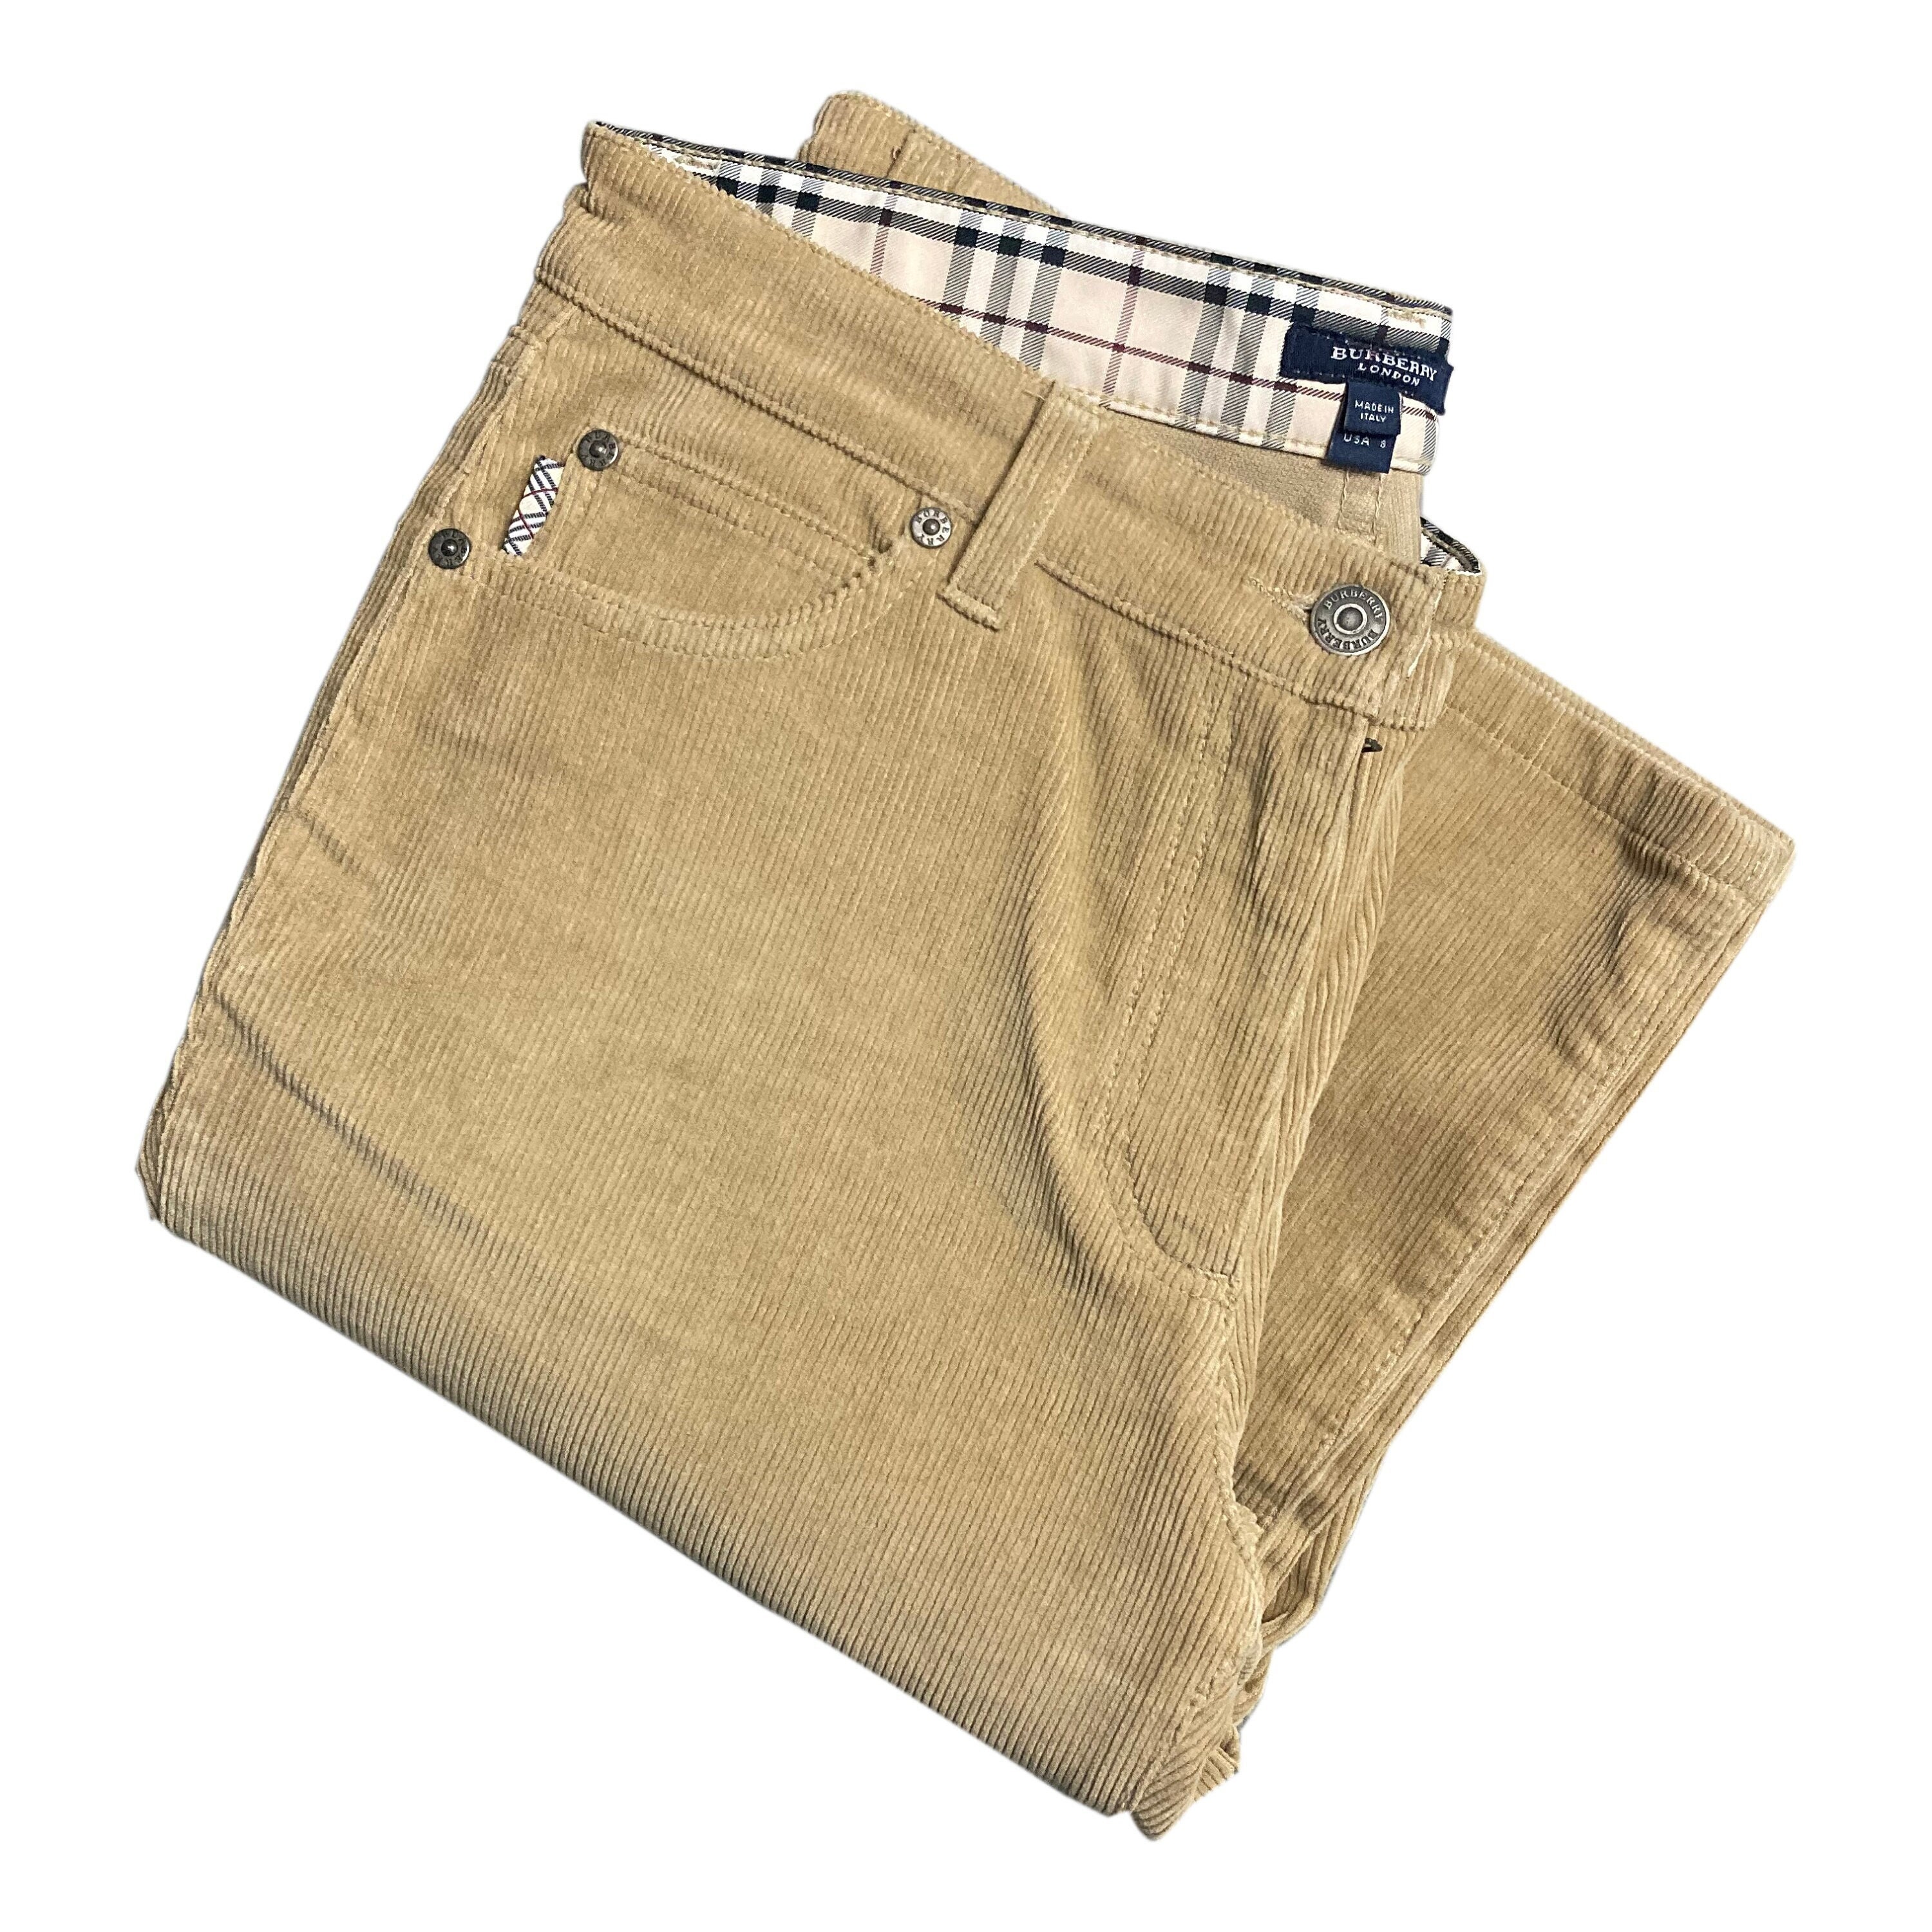 Klotthe Trousers - Buy Klotthe Trousers online in India